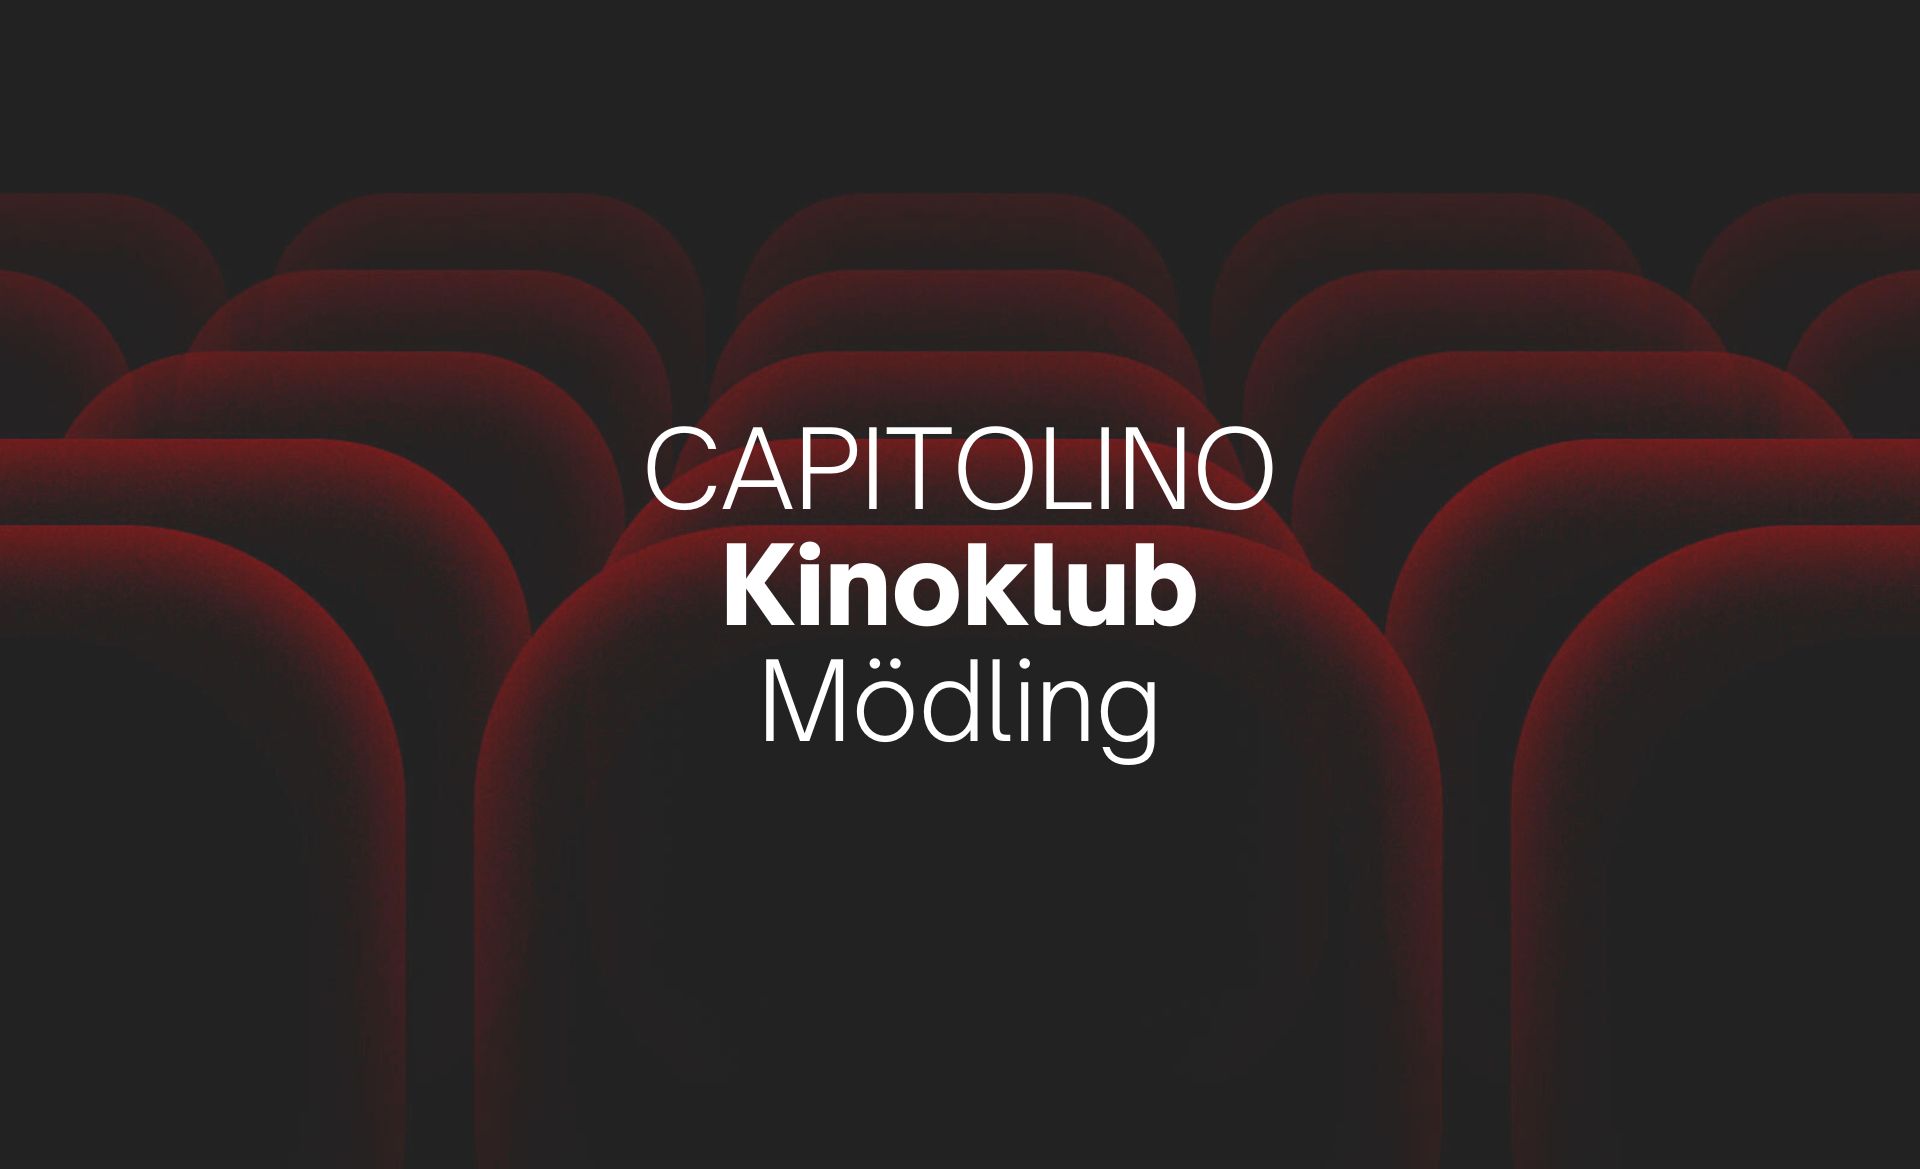 CAPITOLINO Kinoklub Mödling